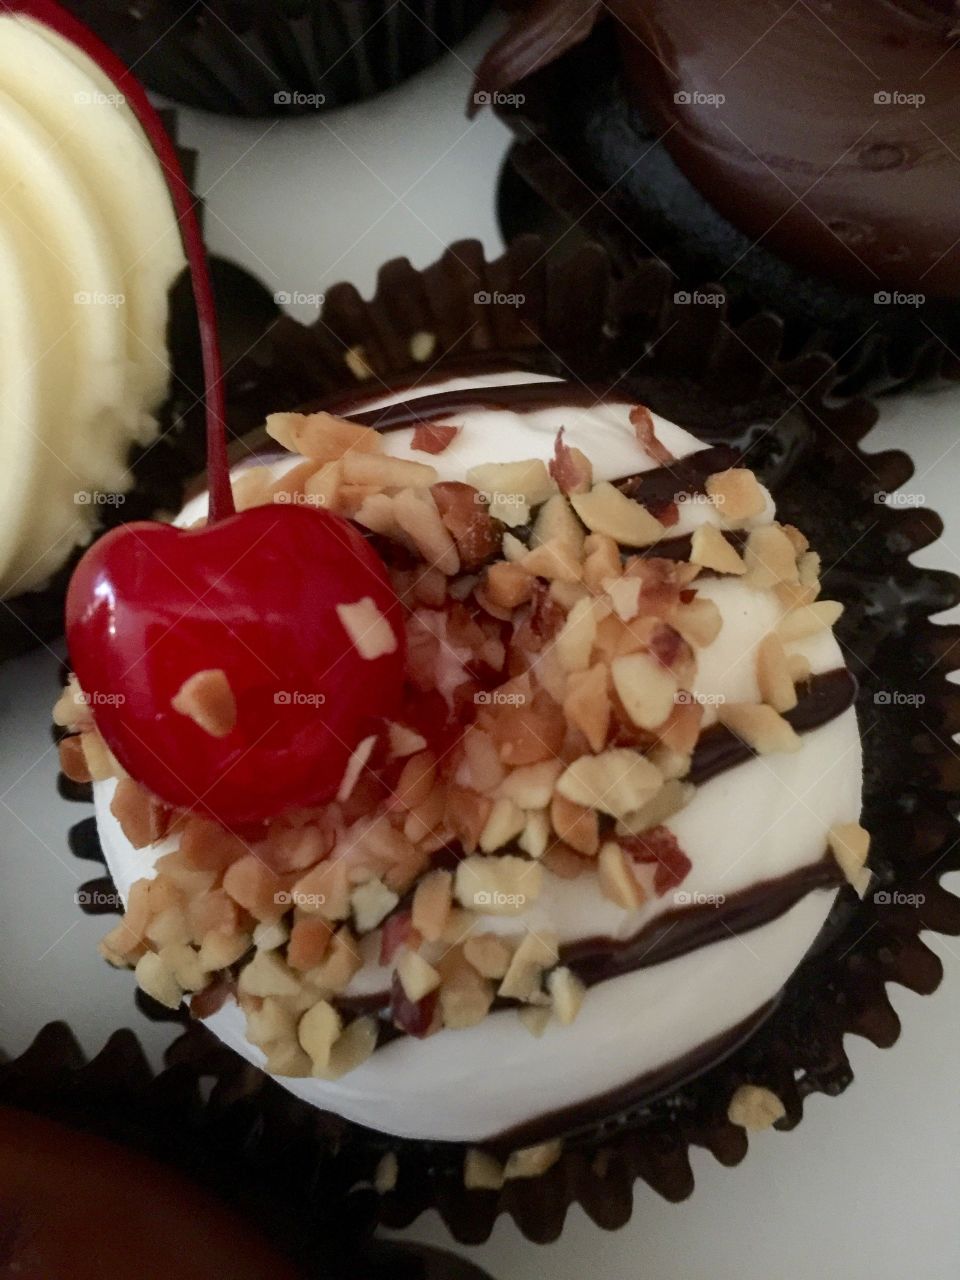 Cherry on a cupcake